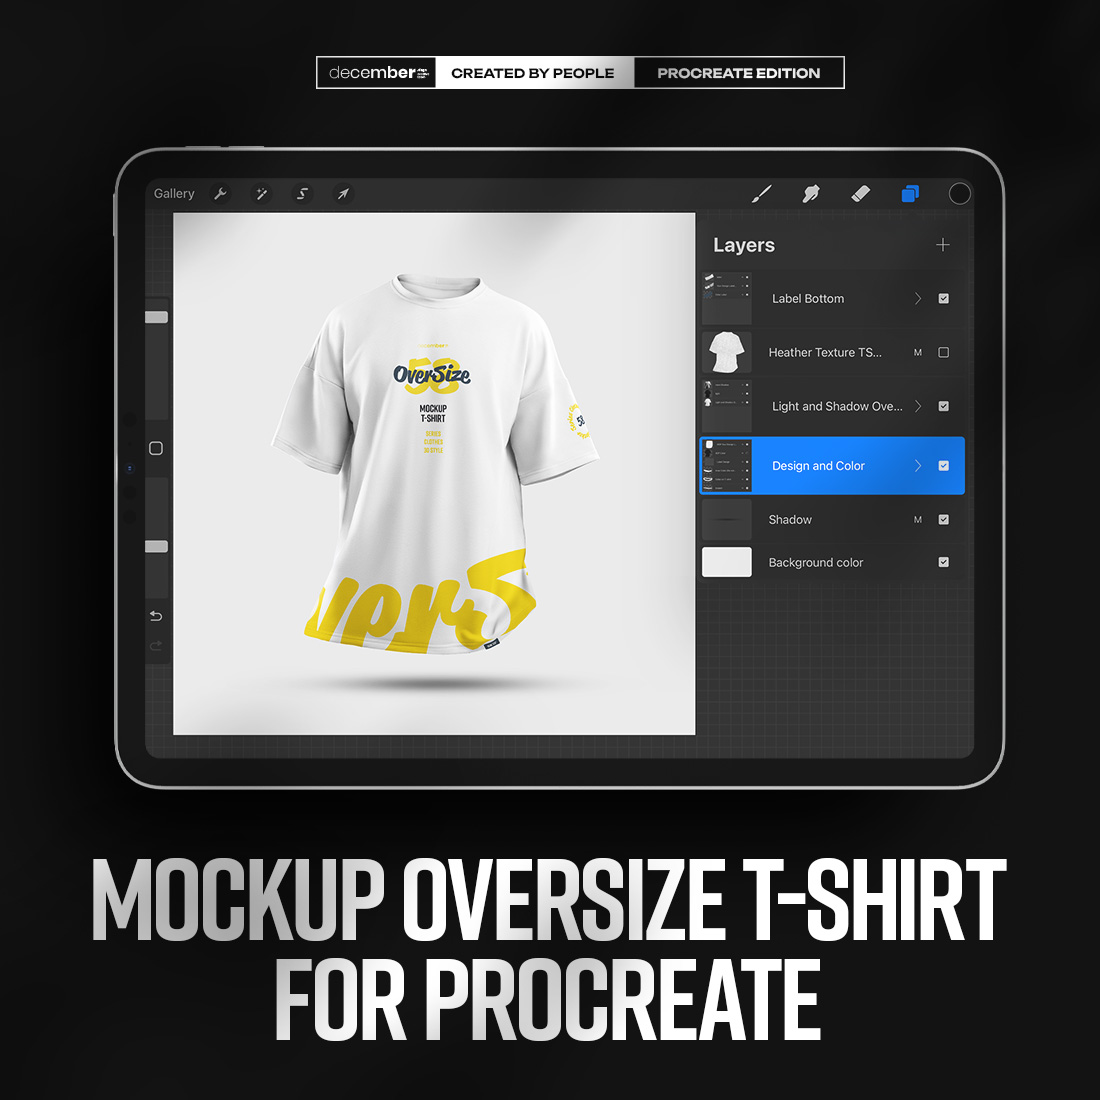 4 Mockups Oversize T-shirt for Procreate cover image.